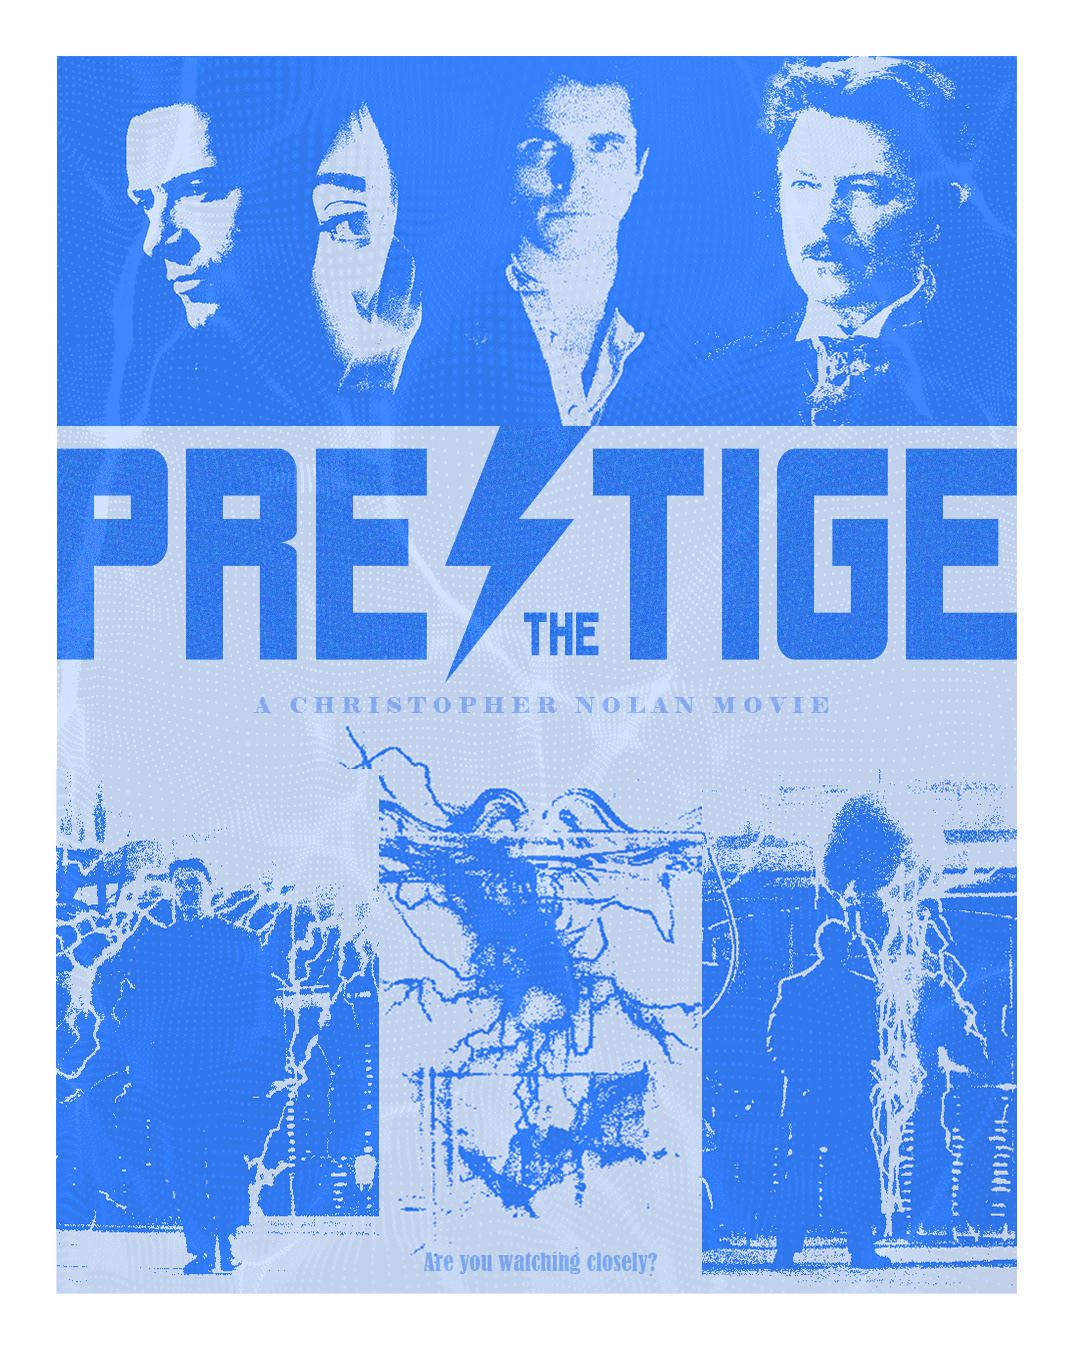 Christopher Nolan Movie Poster Design The Prestige